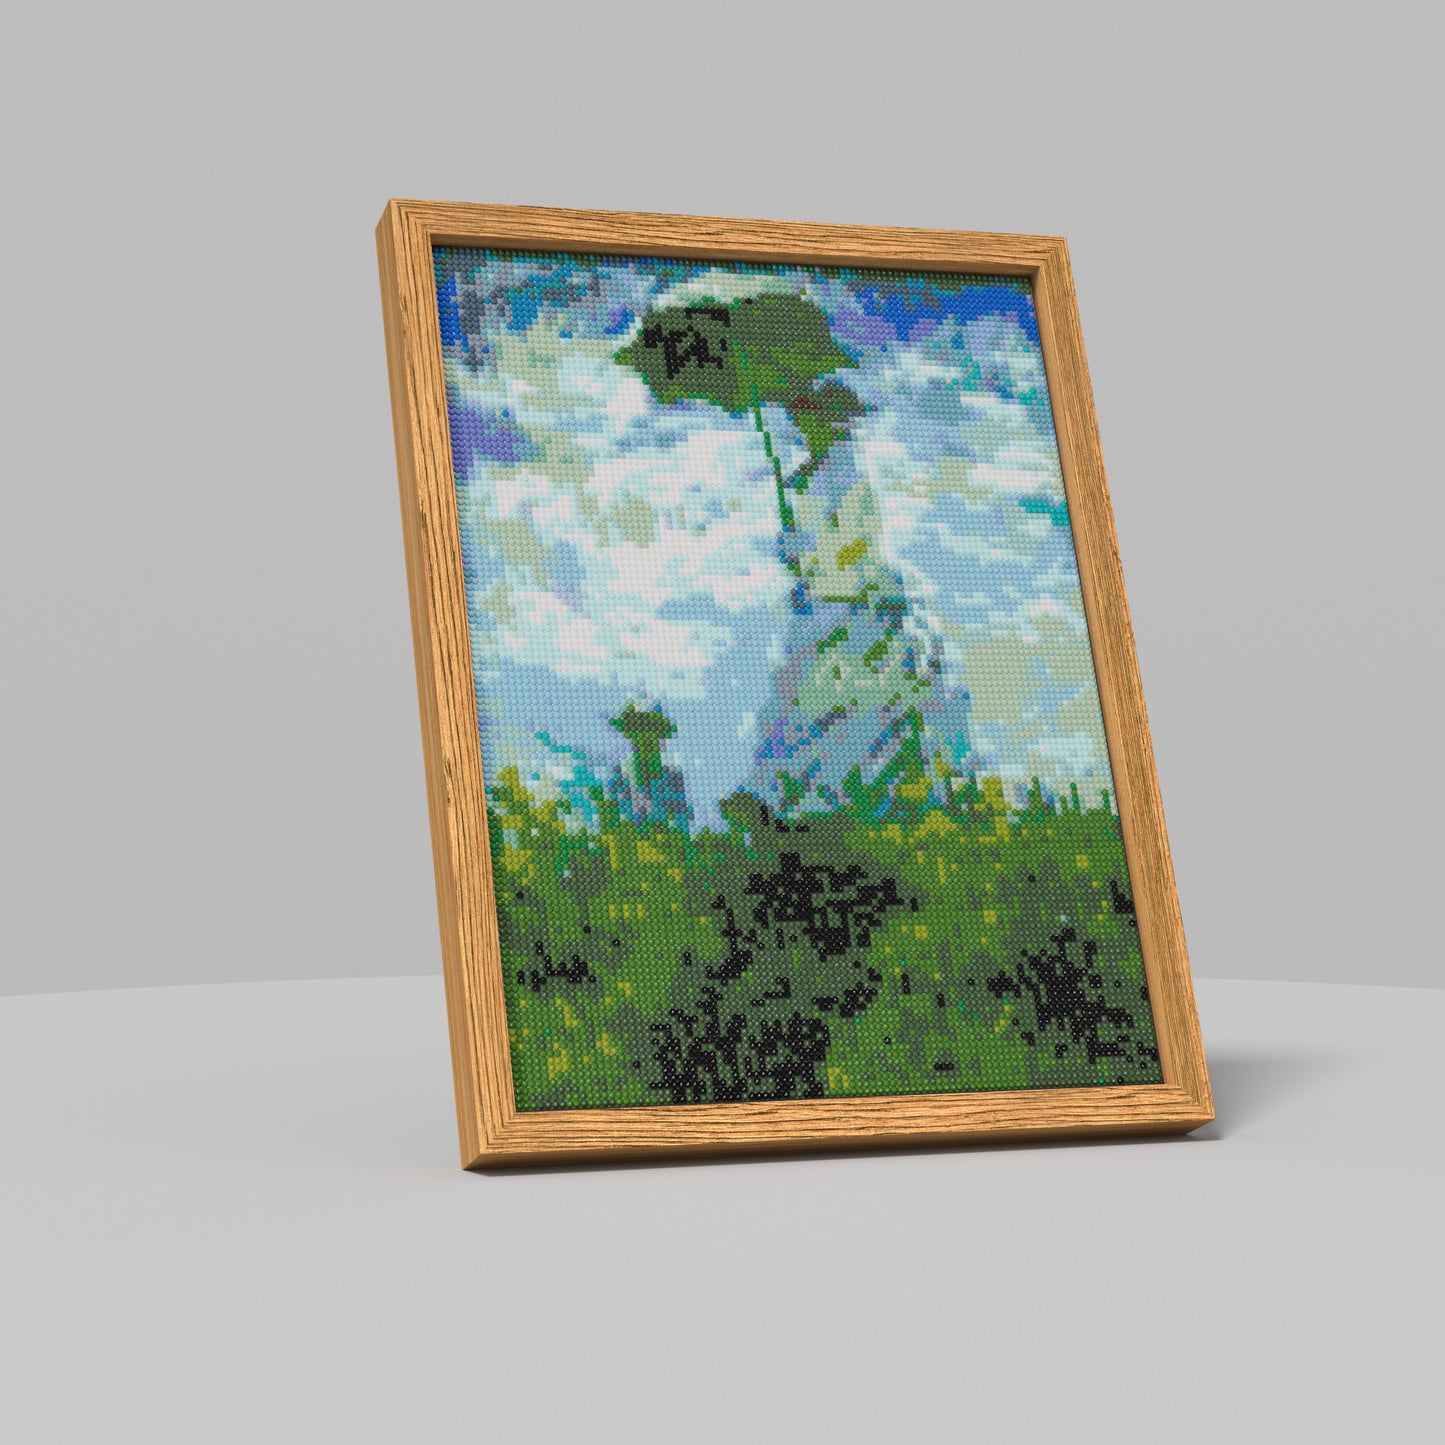 Woman with a Parasol - Claude Monet, Impressionist Landscape Theme Diamond Painting, 96*128 Dots, 26 Faces ABS Diamond, Elegant Solid Wood Frame